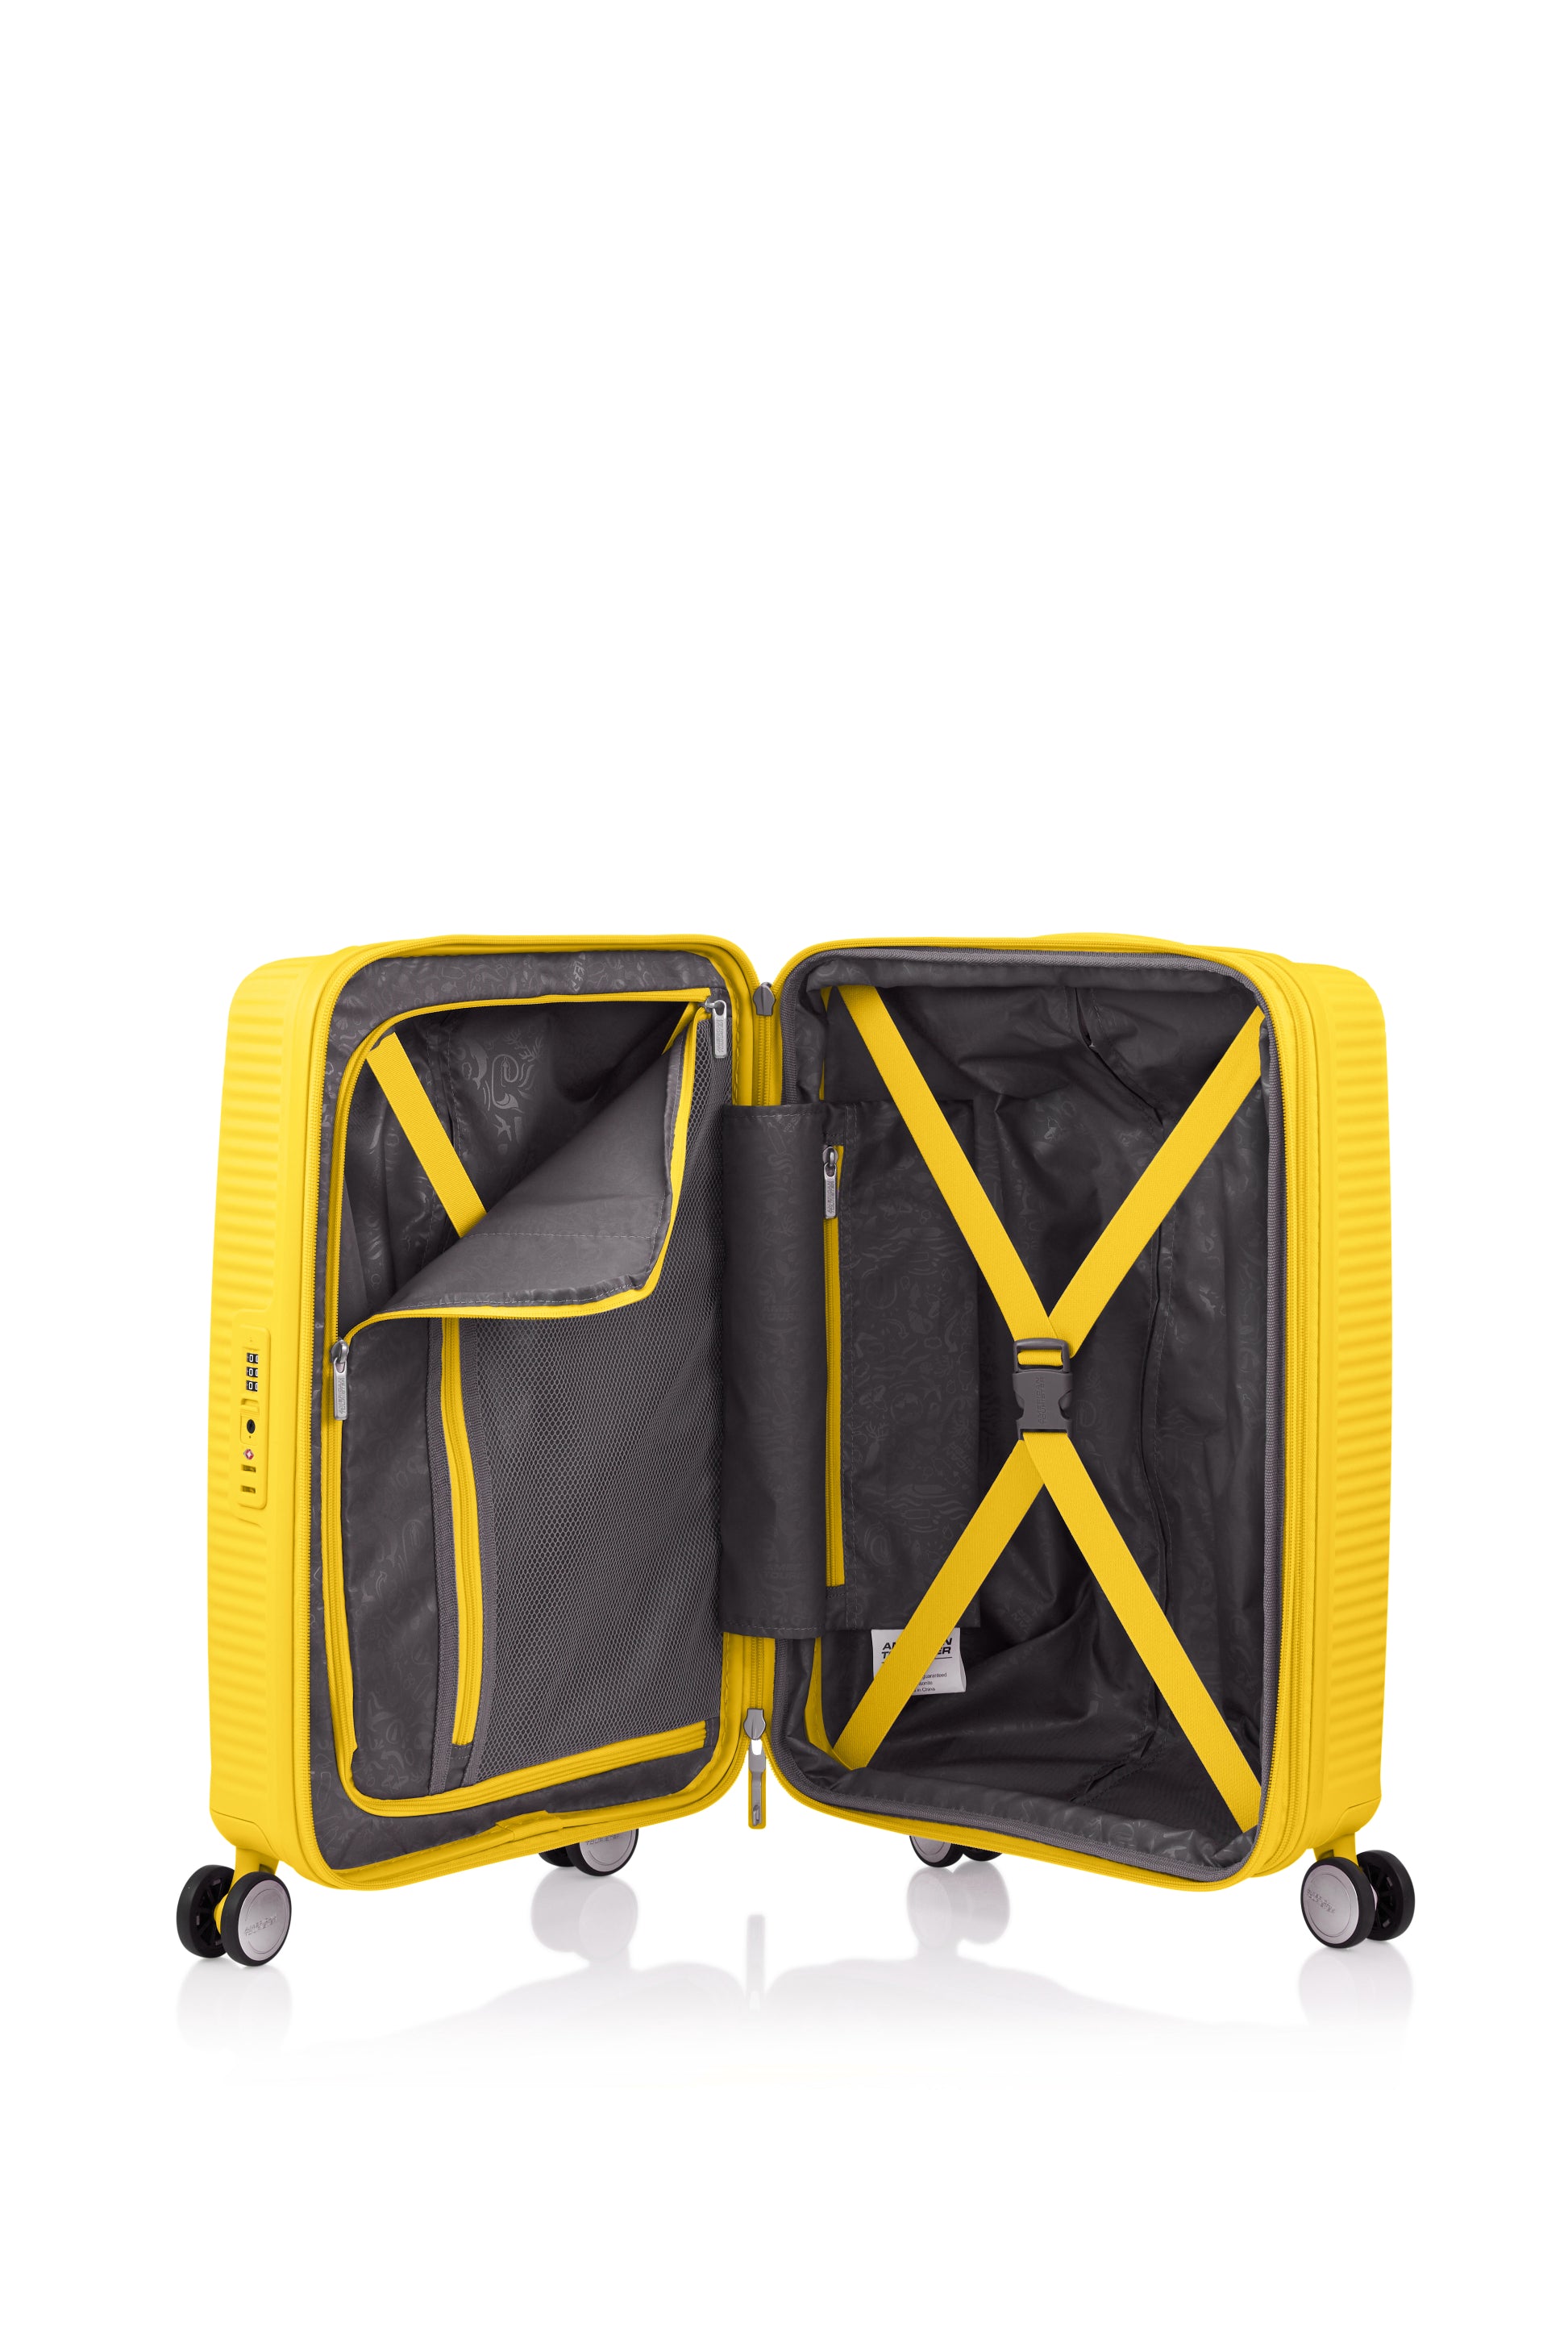 American Tourister - Curio 2.0 55cm Small Suitcase - Golden Yellow-4